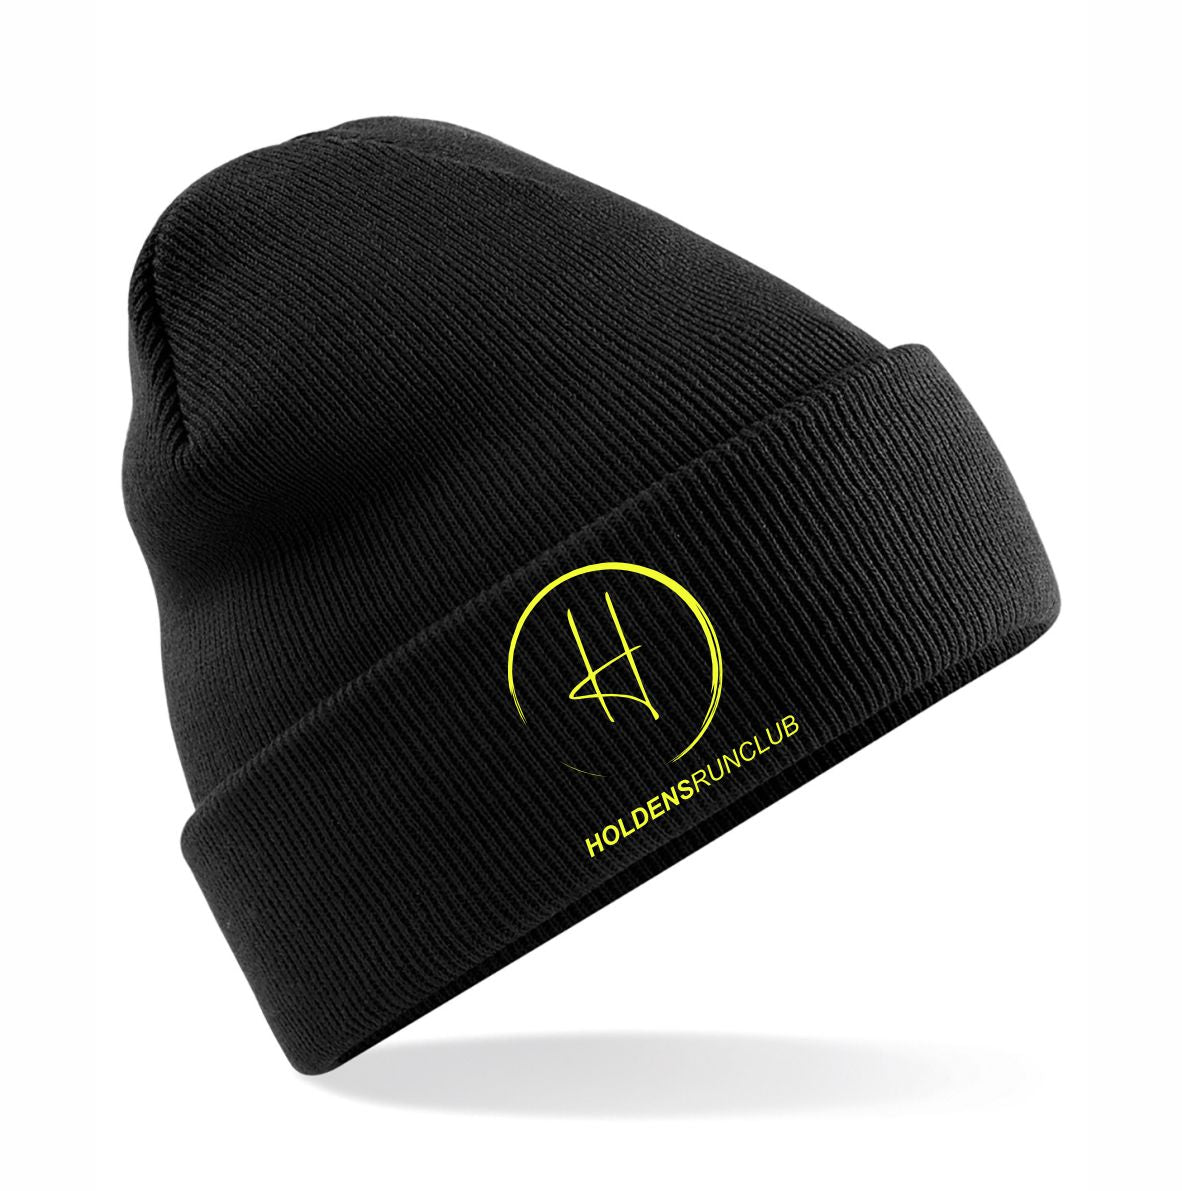 Holdens Run Club - Woolly Hat